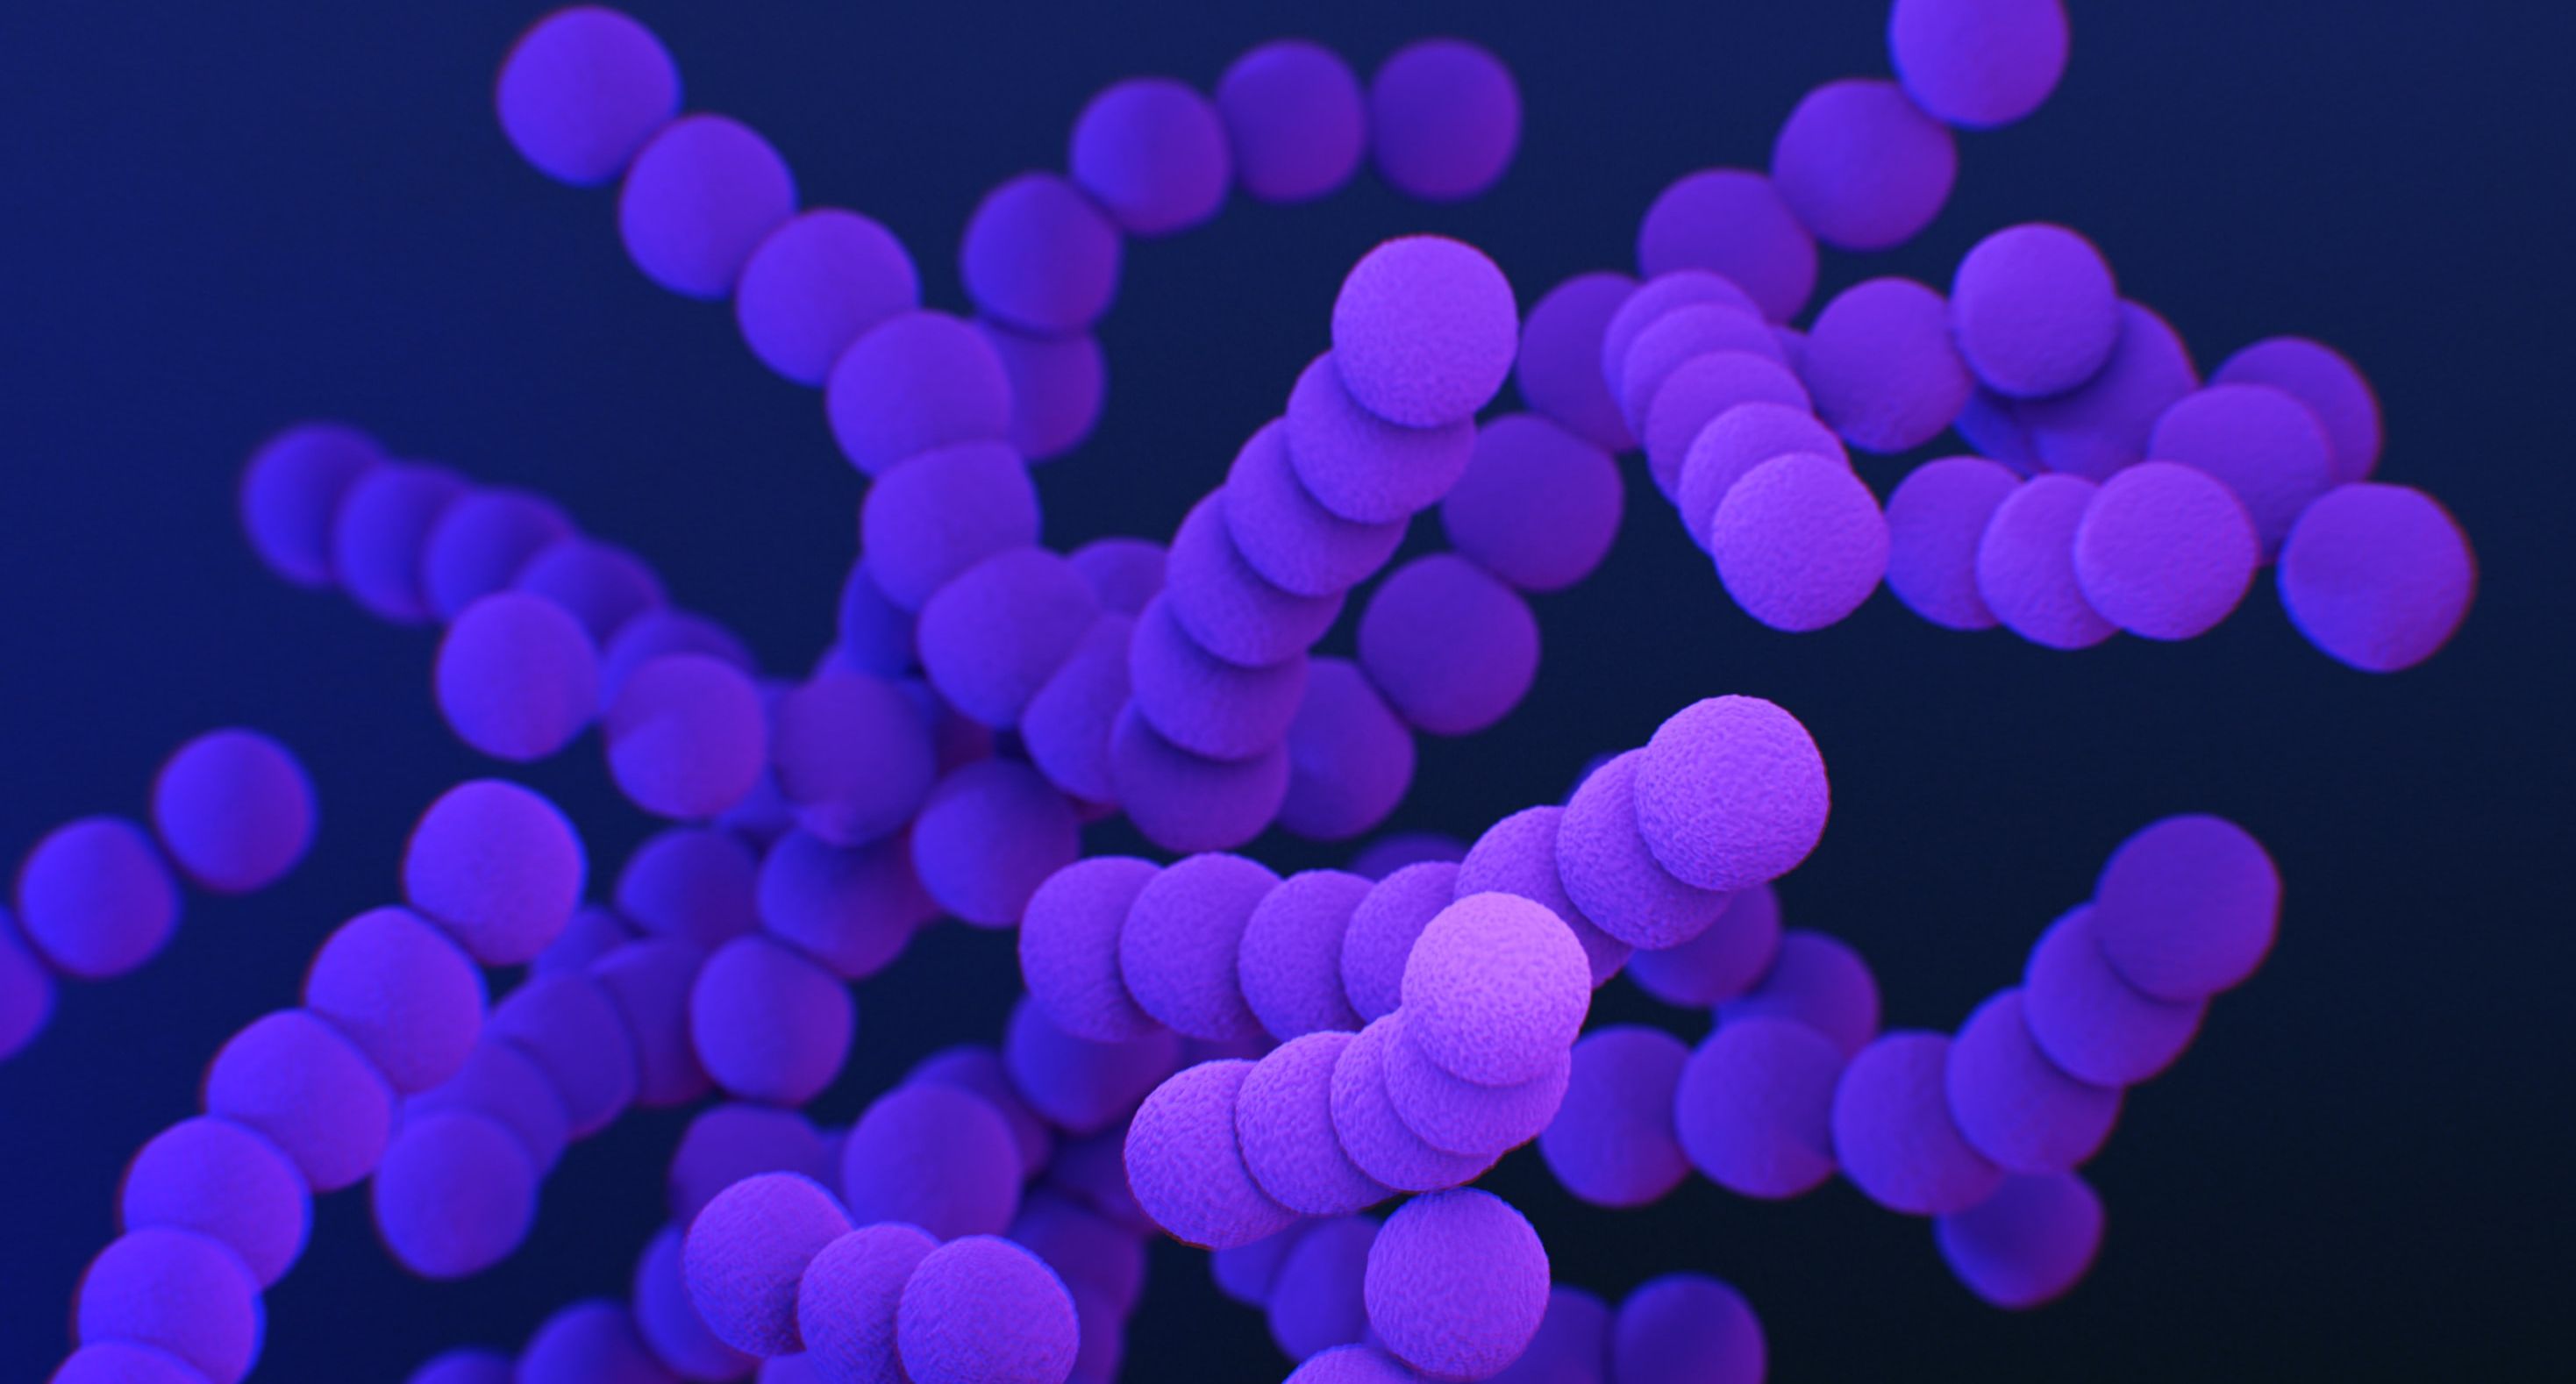 microscopic image of purple organism